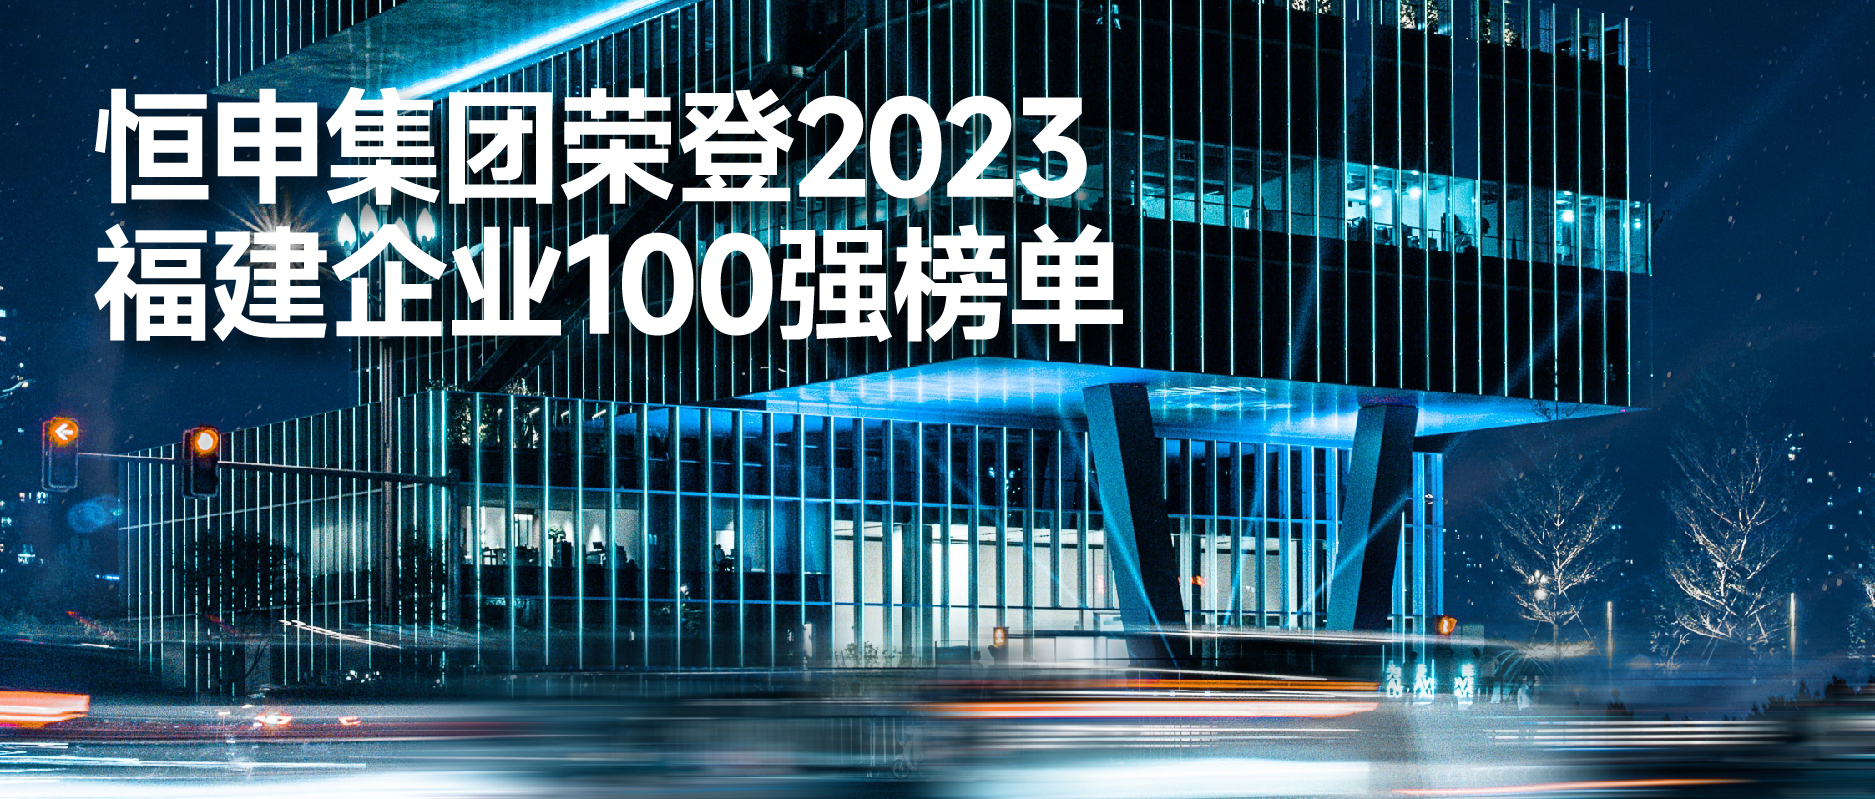 Highsun Group won the 15th place in "Top 100 Fujian Enterprises 2023"